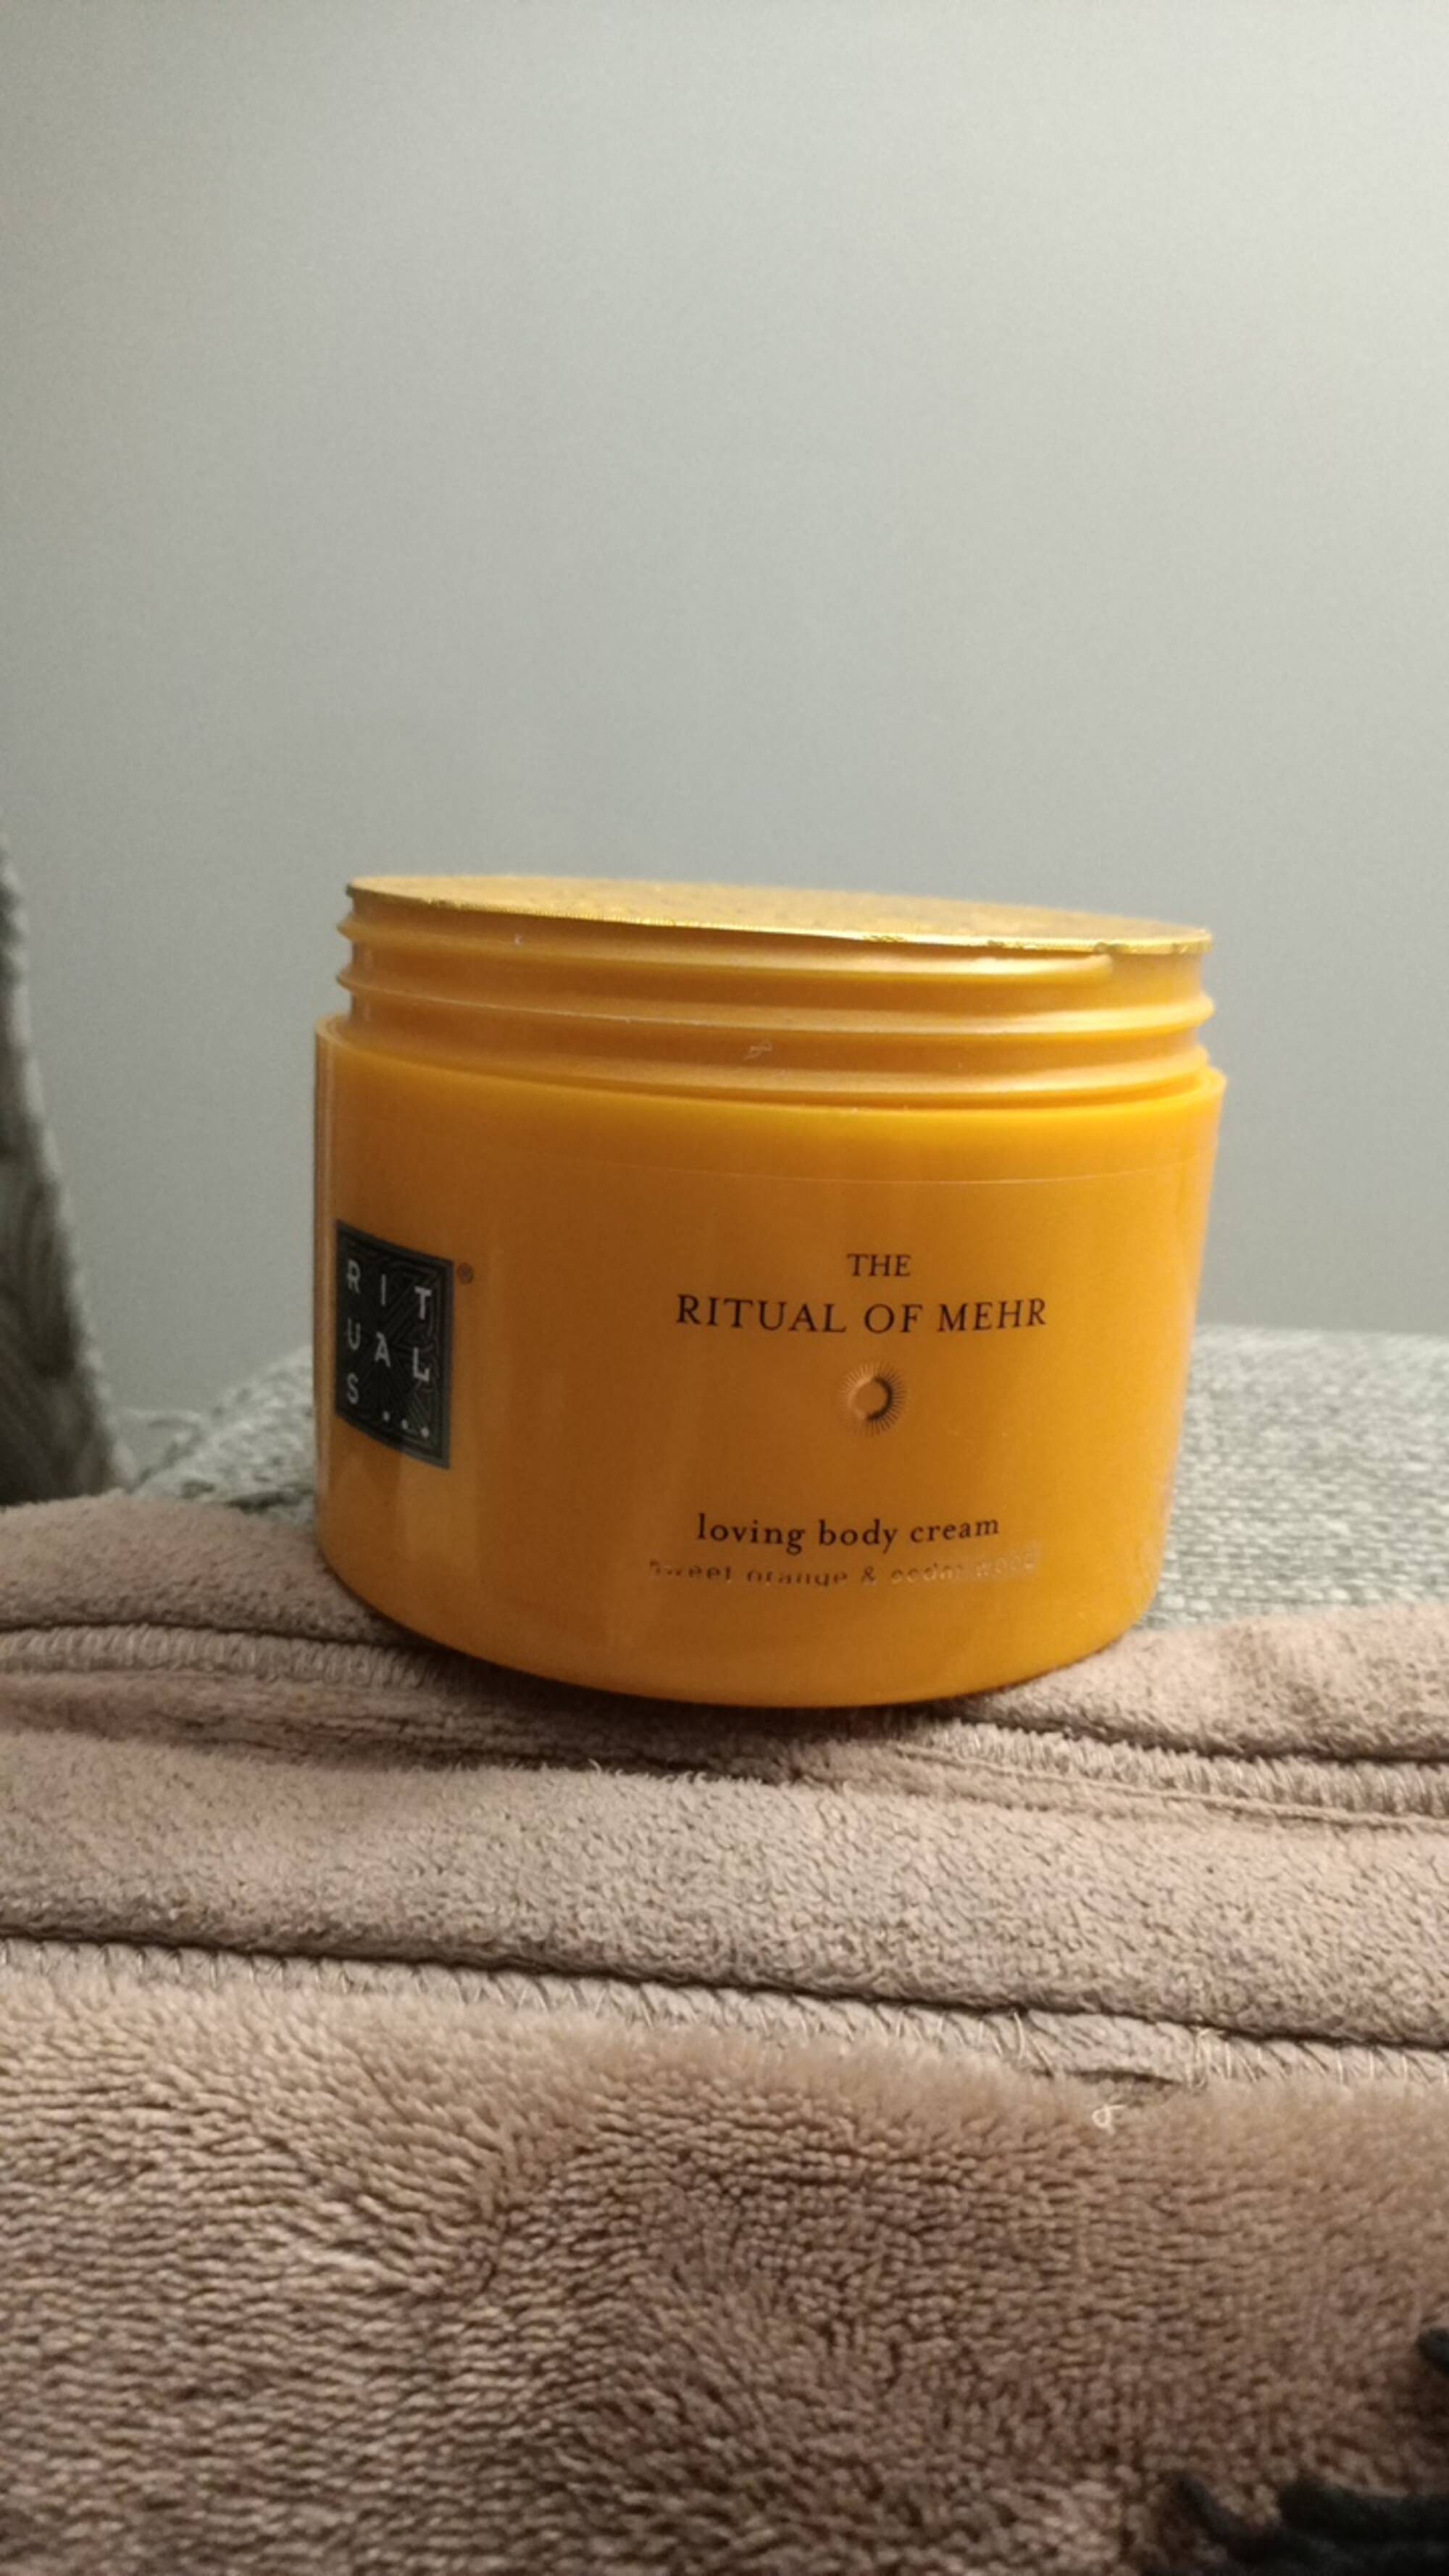 RITUALS - The ritual of mehr - Loving body cream